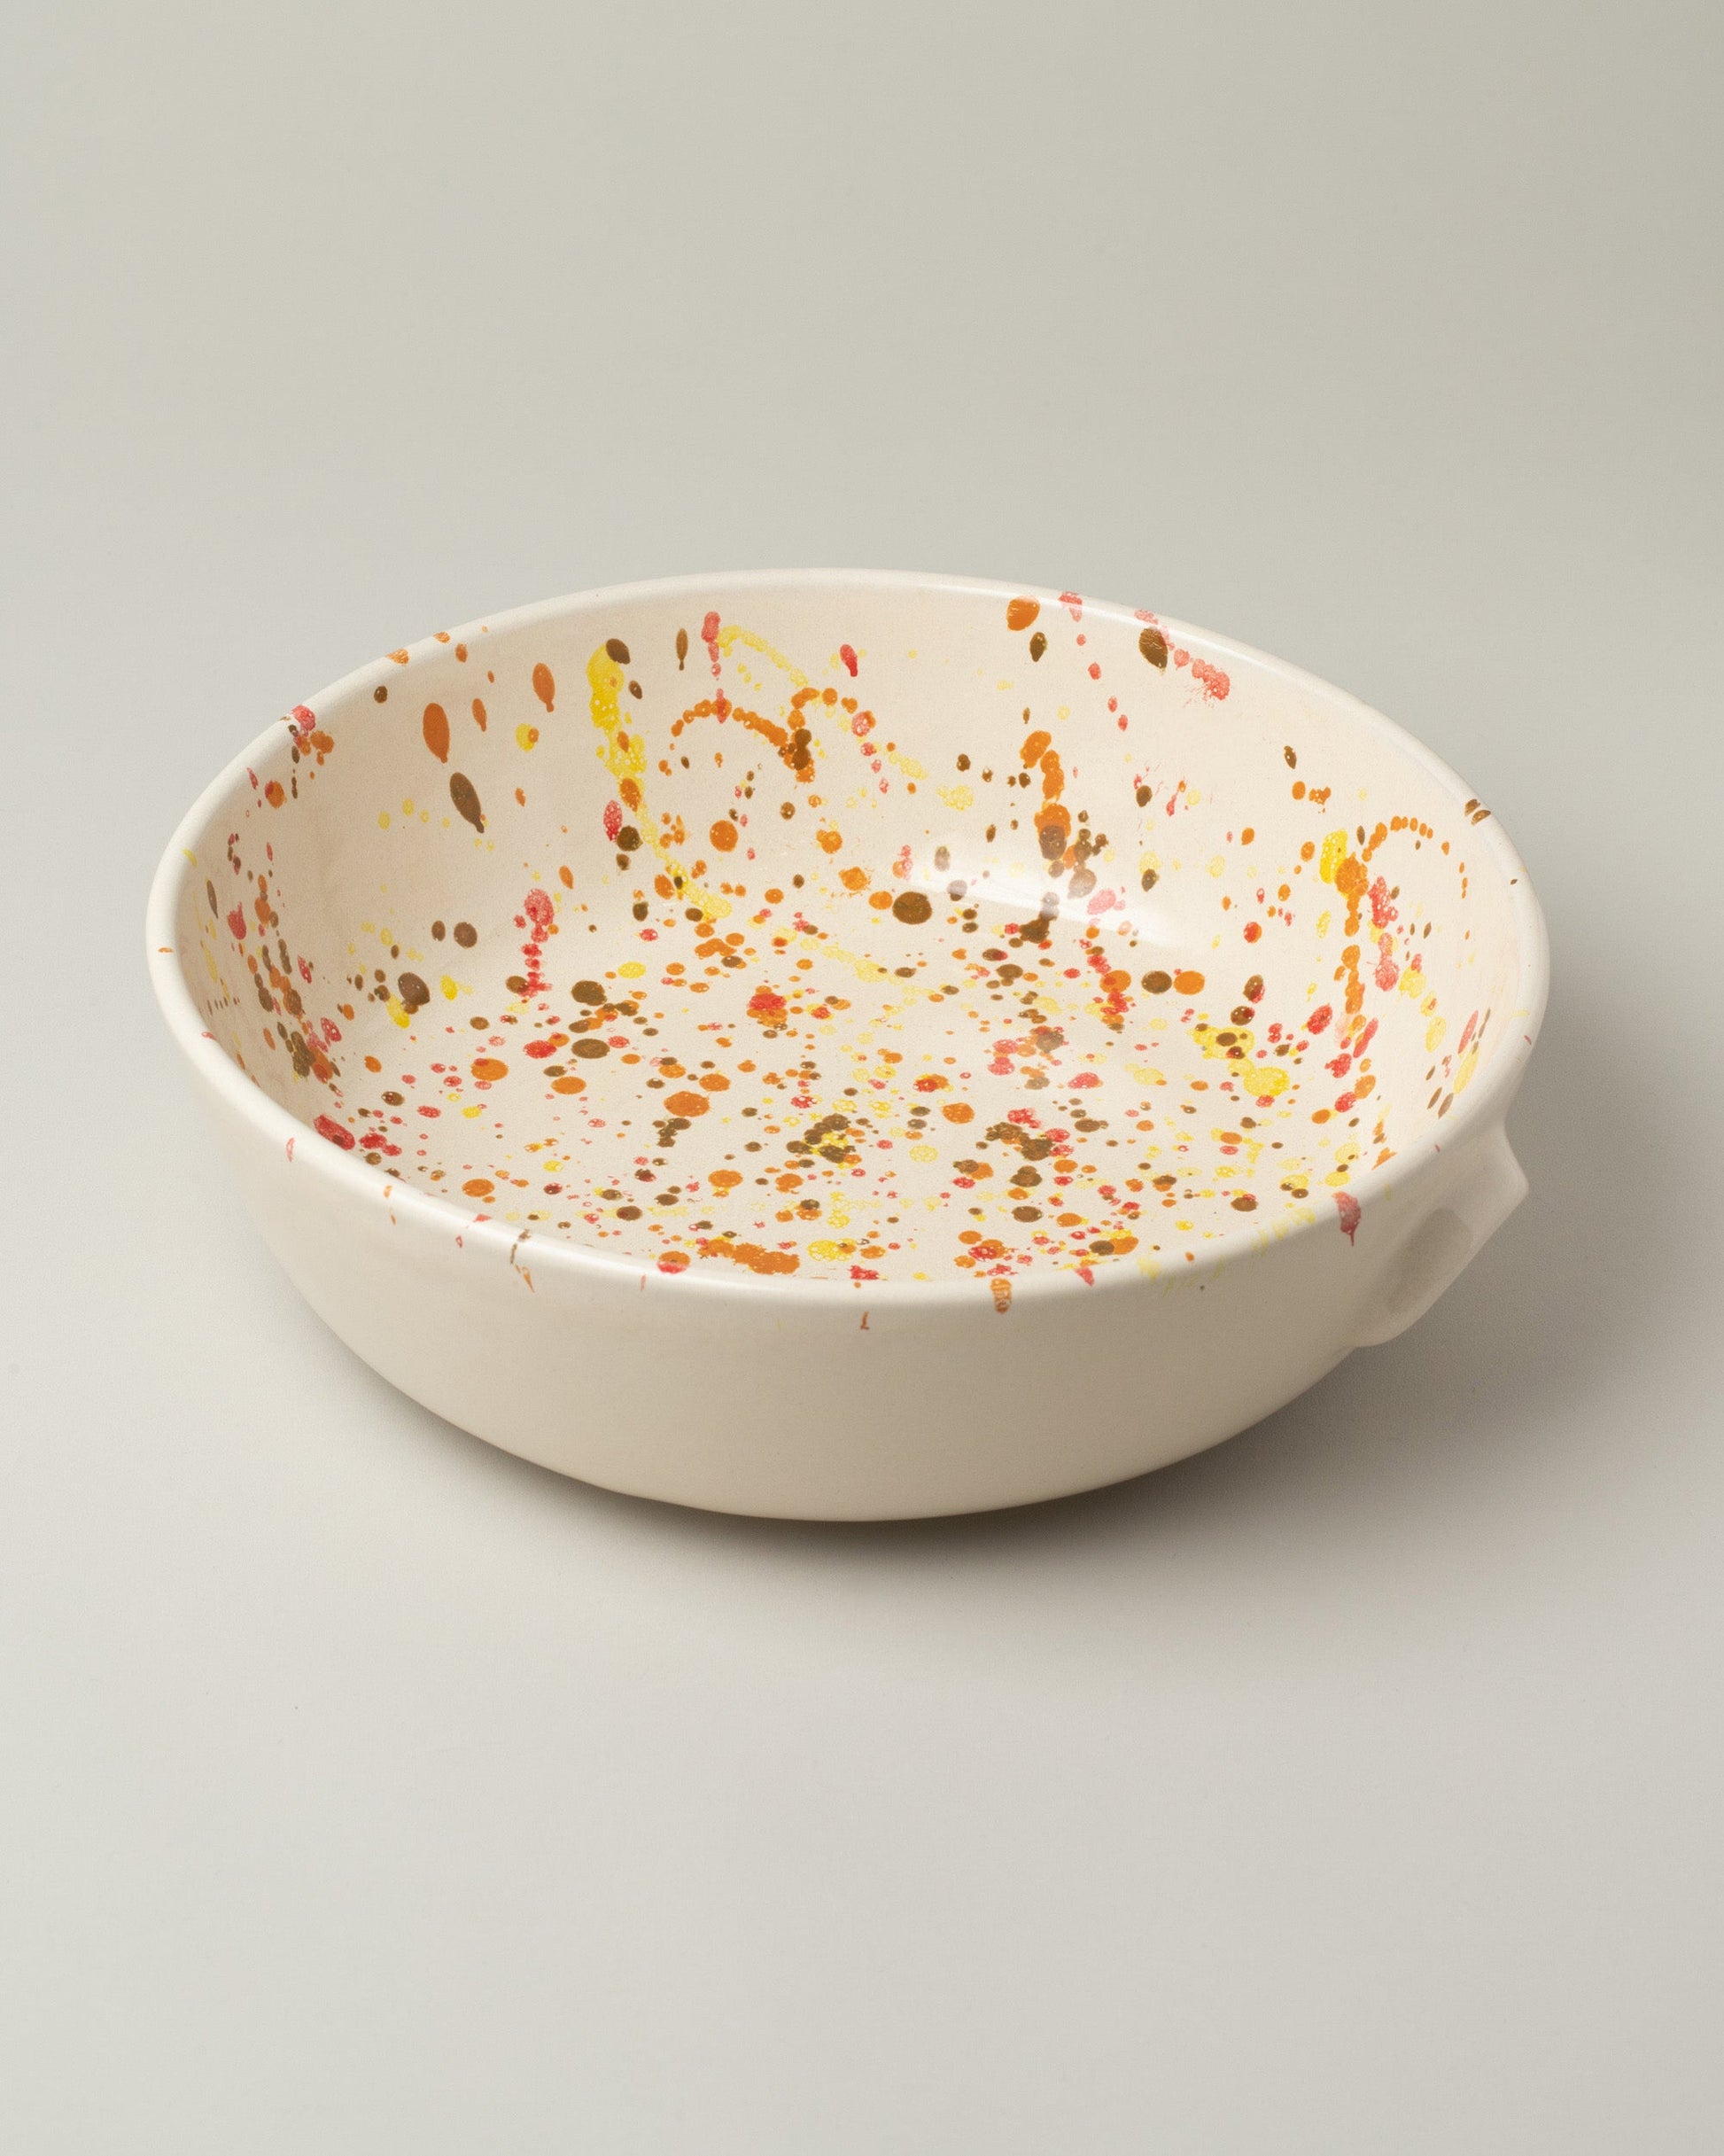 La Ceramica Vincenzo Del Monaco Soft Drops Large Salad Bowl on light color background.